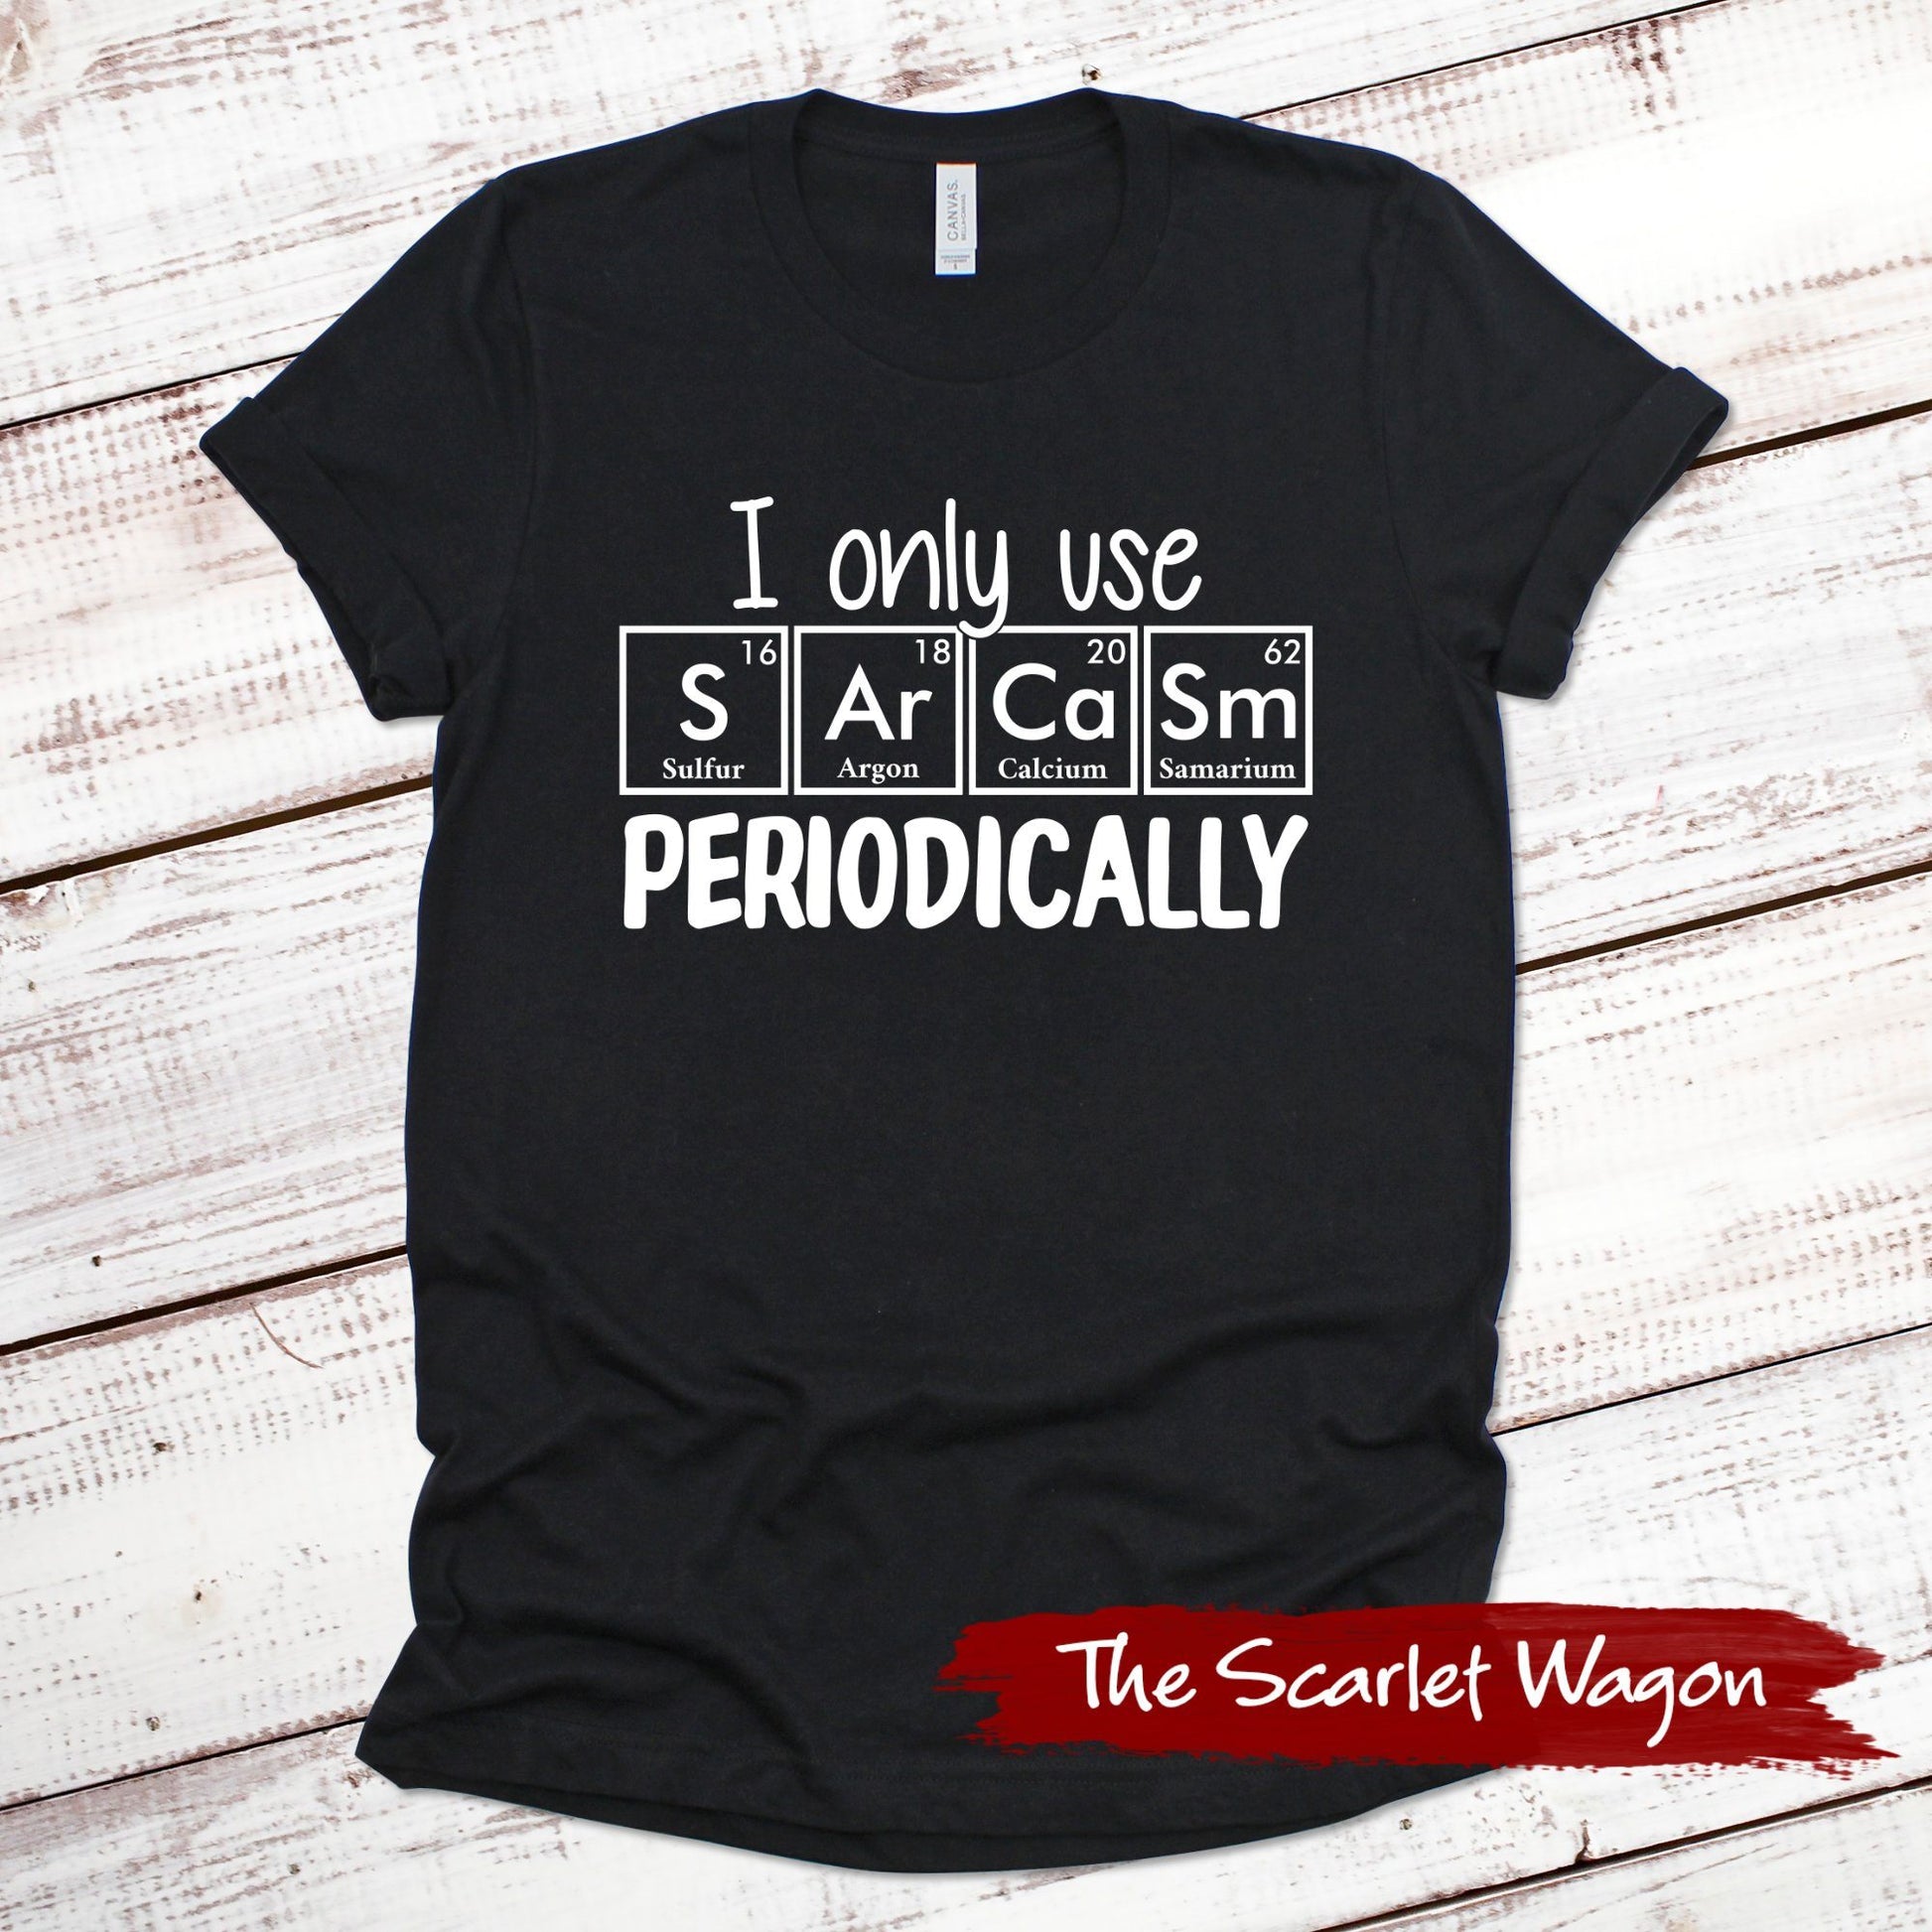 I Only Use Sarcasm Periodically Funny Shirt Scarlet Wagon Black XS 